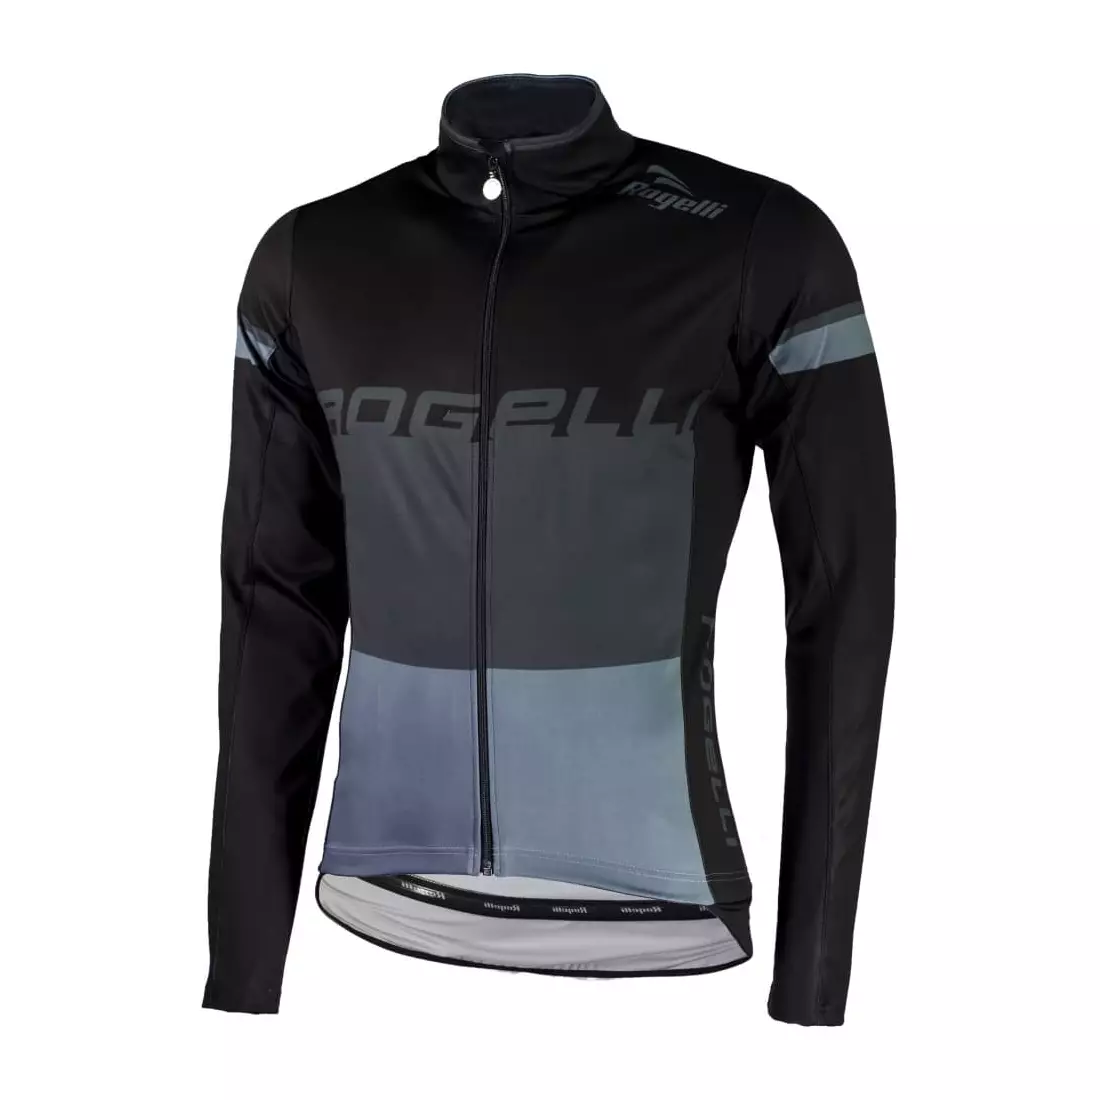 Rogelli HYDRO voděodolný pánský cyklistický dres s dlouhým rukávem, černá a šedá